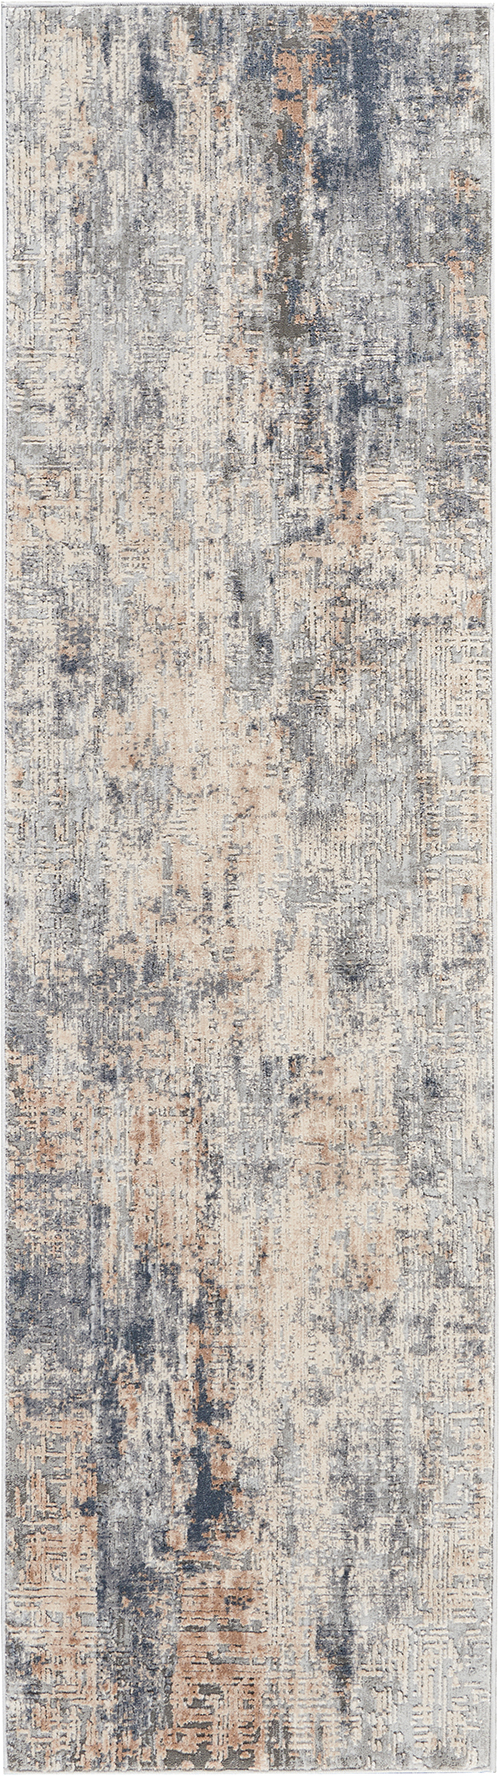 Nourison Rugs - Rustic Textures Runner RUS01 Rug in Grey / Beige - 2.3m x 0.66m